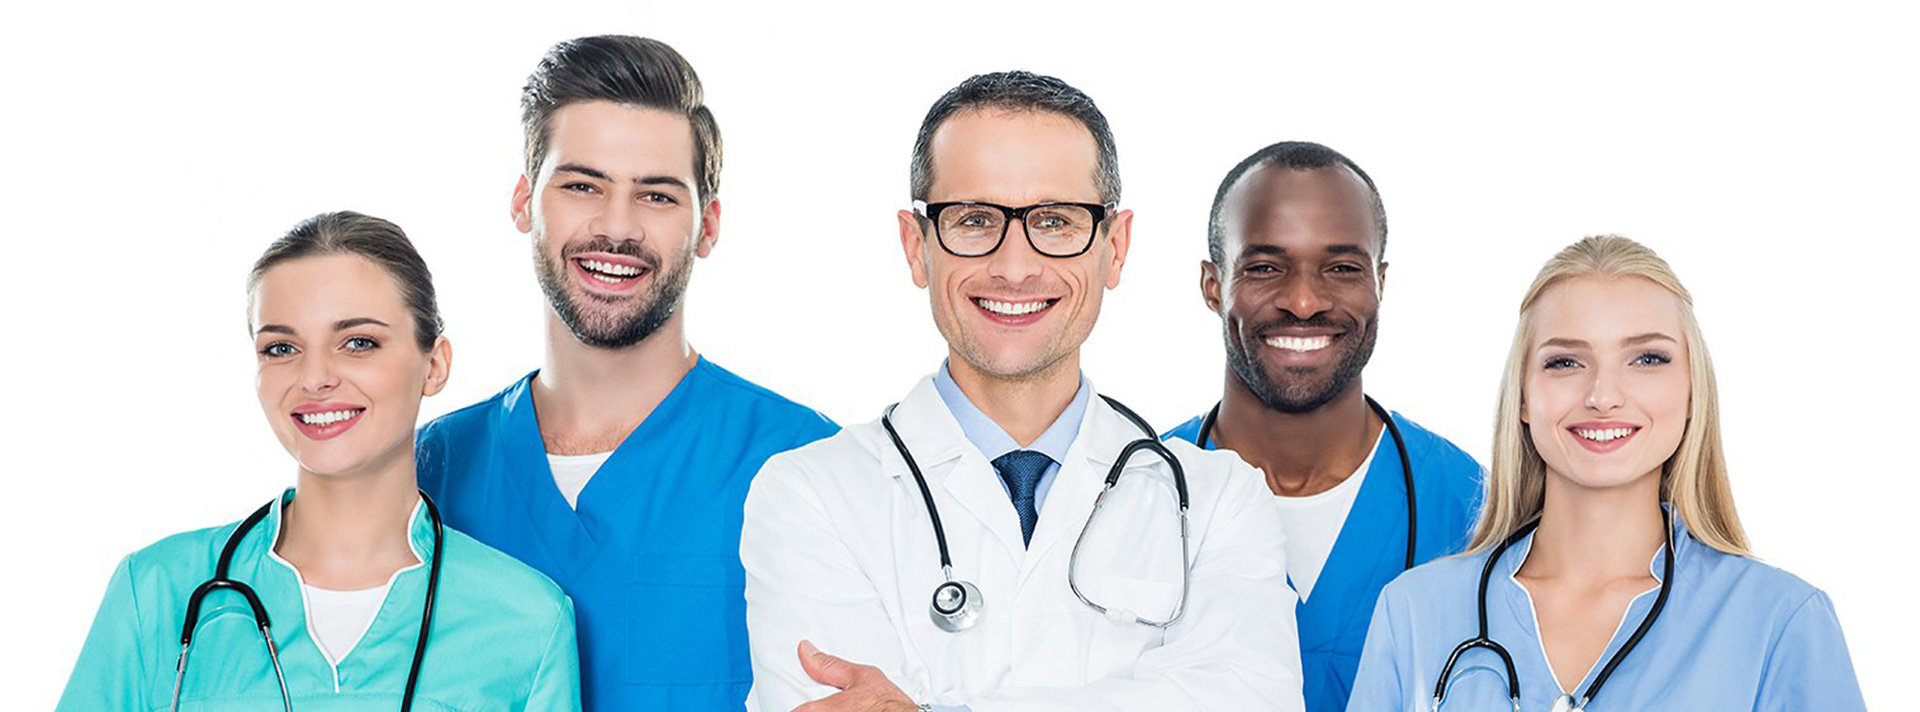 Medical Marijuana Doctors in Boca Raton, Florida 33434